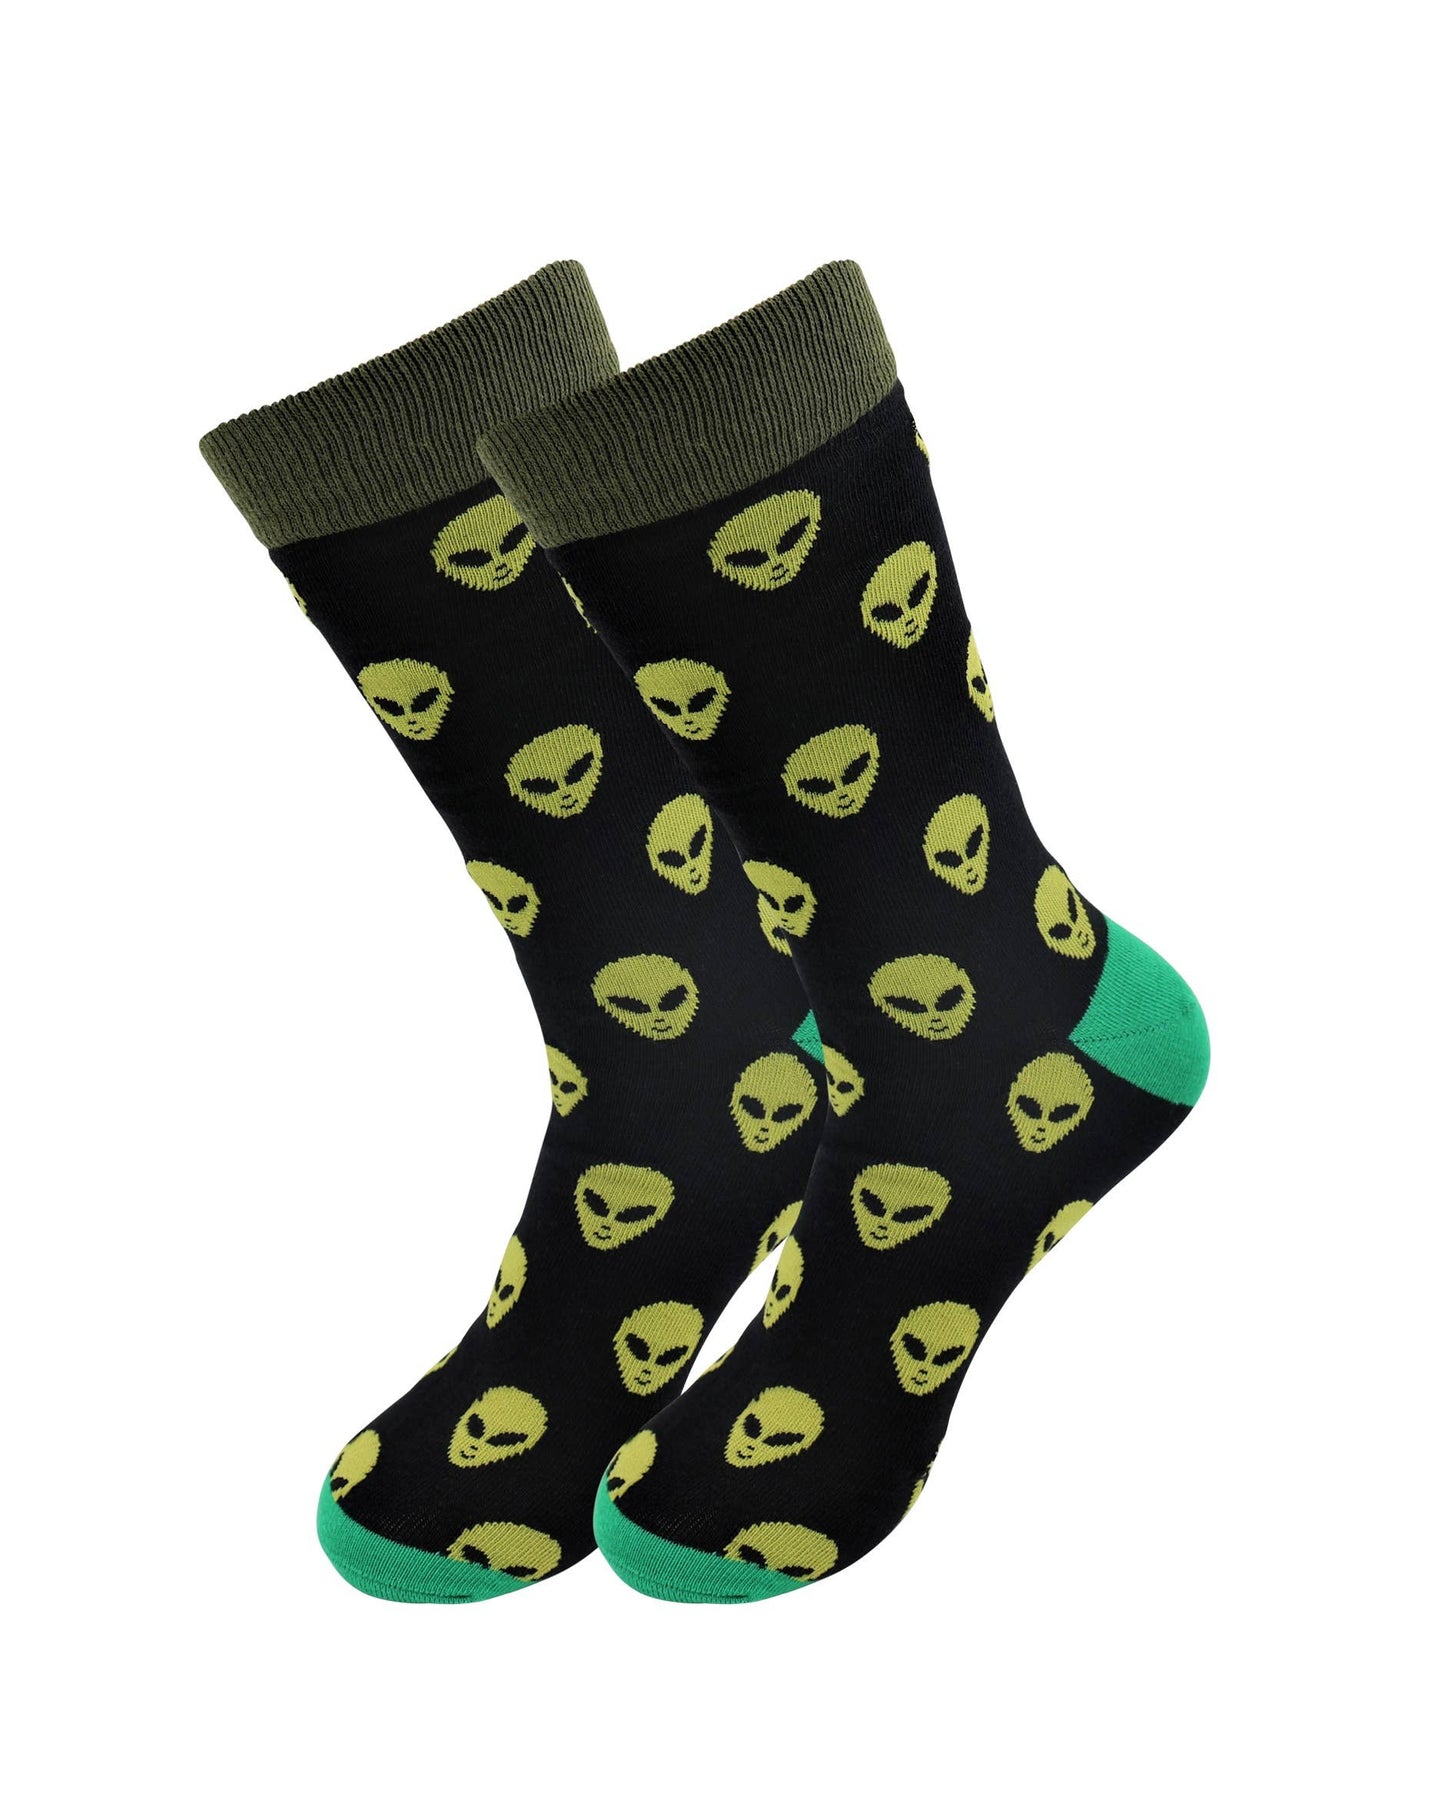 Image of Real Sic Aliens Animal Socks - Shark, Dragon, Crocodile, Beatles Fun Socks